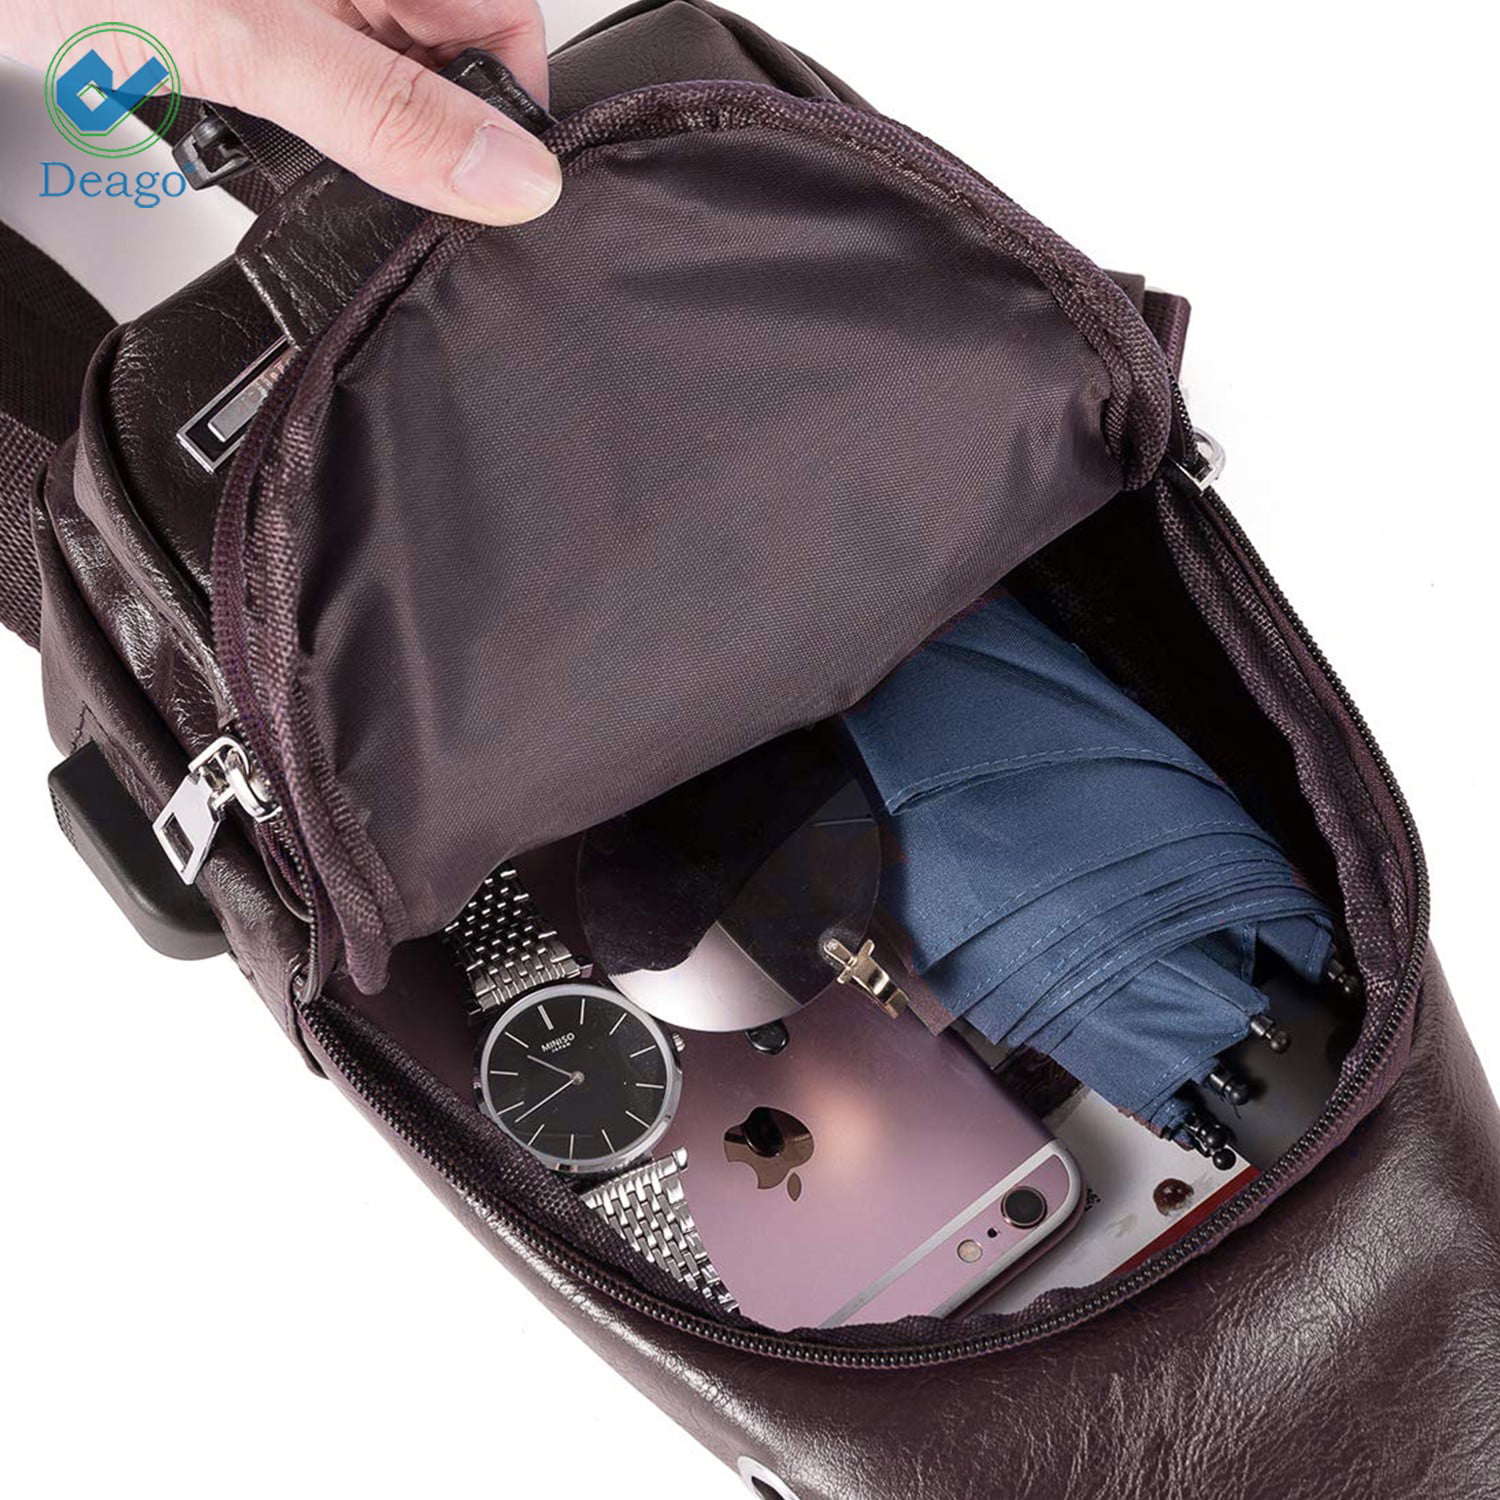 Real Leather Sling Bag for Men Unbalance Chest Bag Bag Small Backpack Crossbody Pack Sling Shoulder Bag for Camping Travel Hiking School Bicyling 